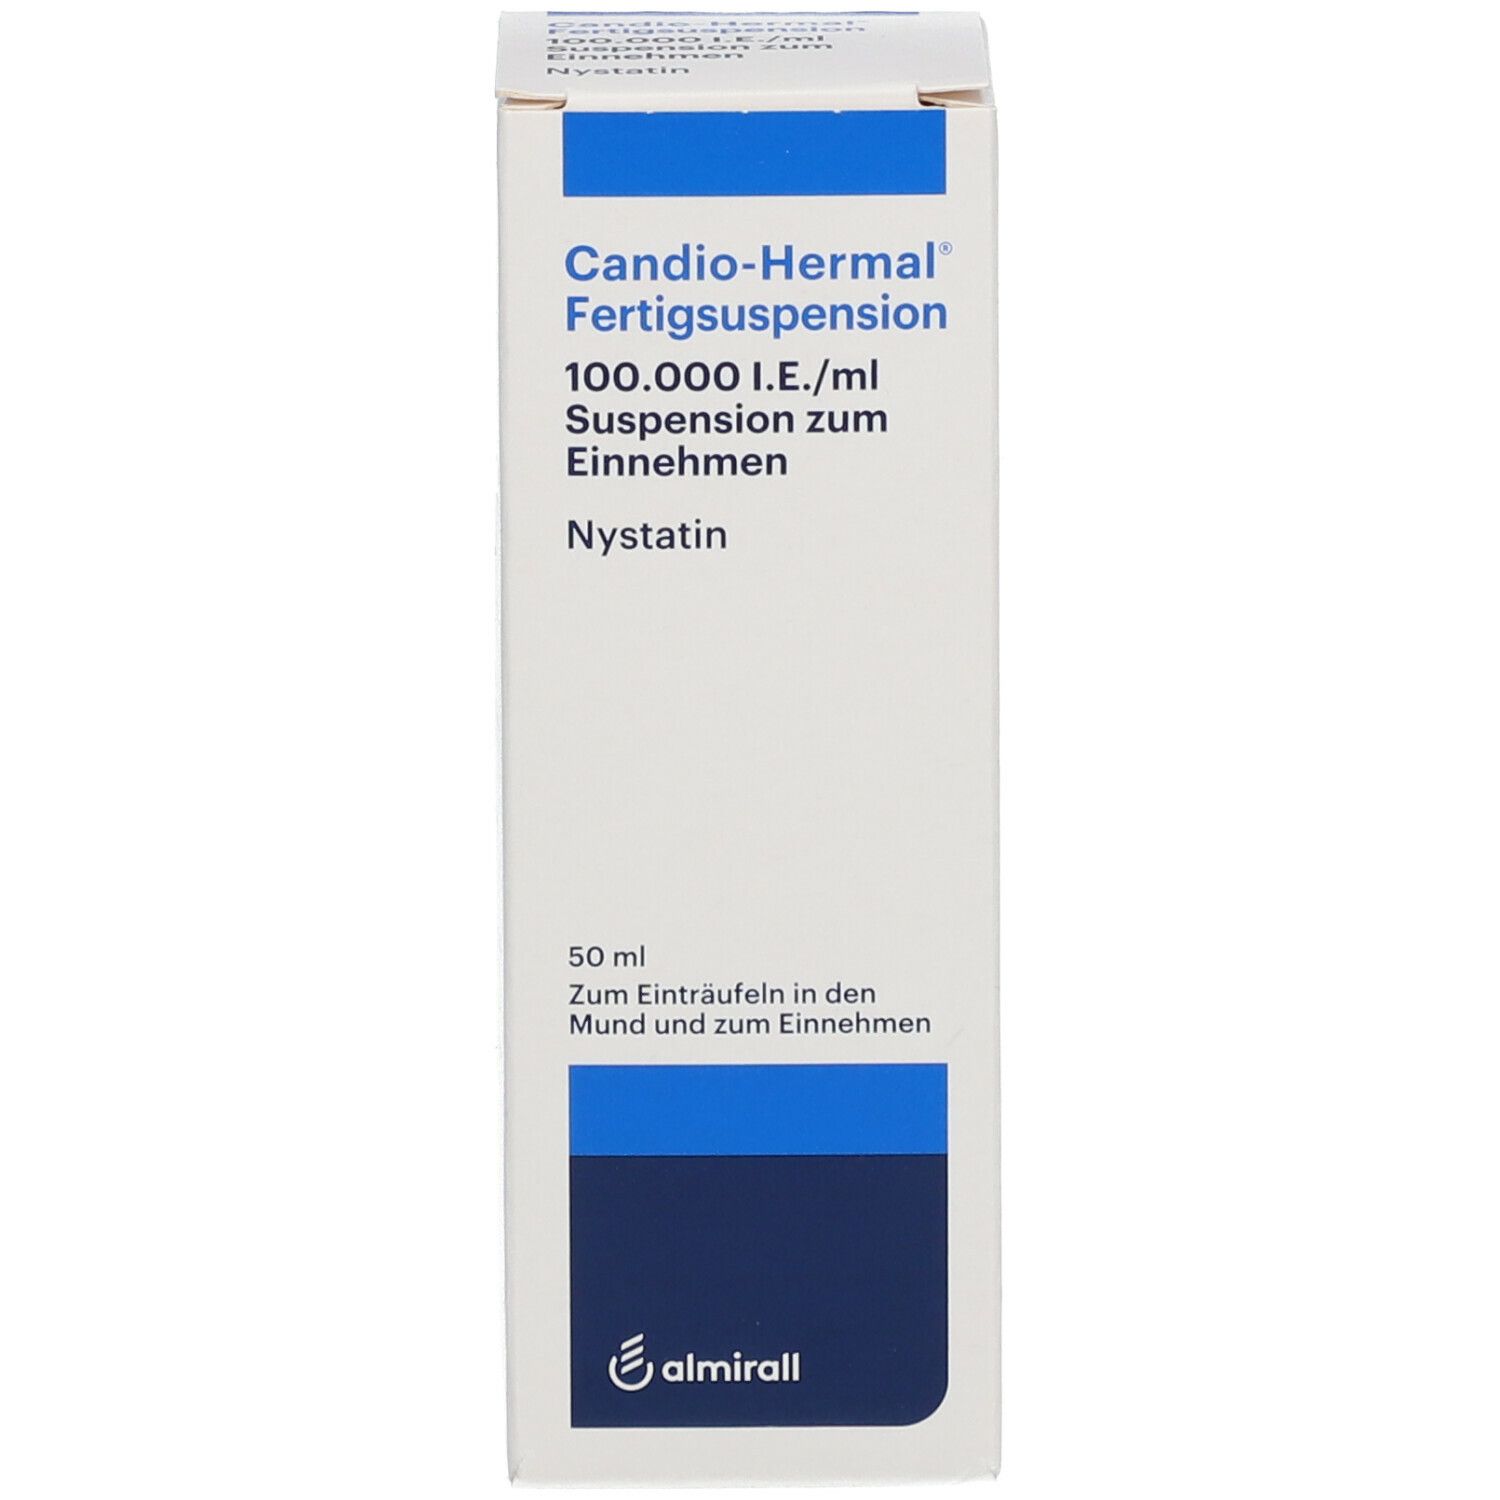 Candio-Hermal® Fertigsuspension